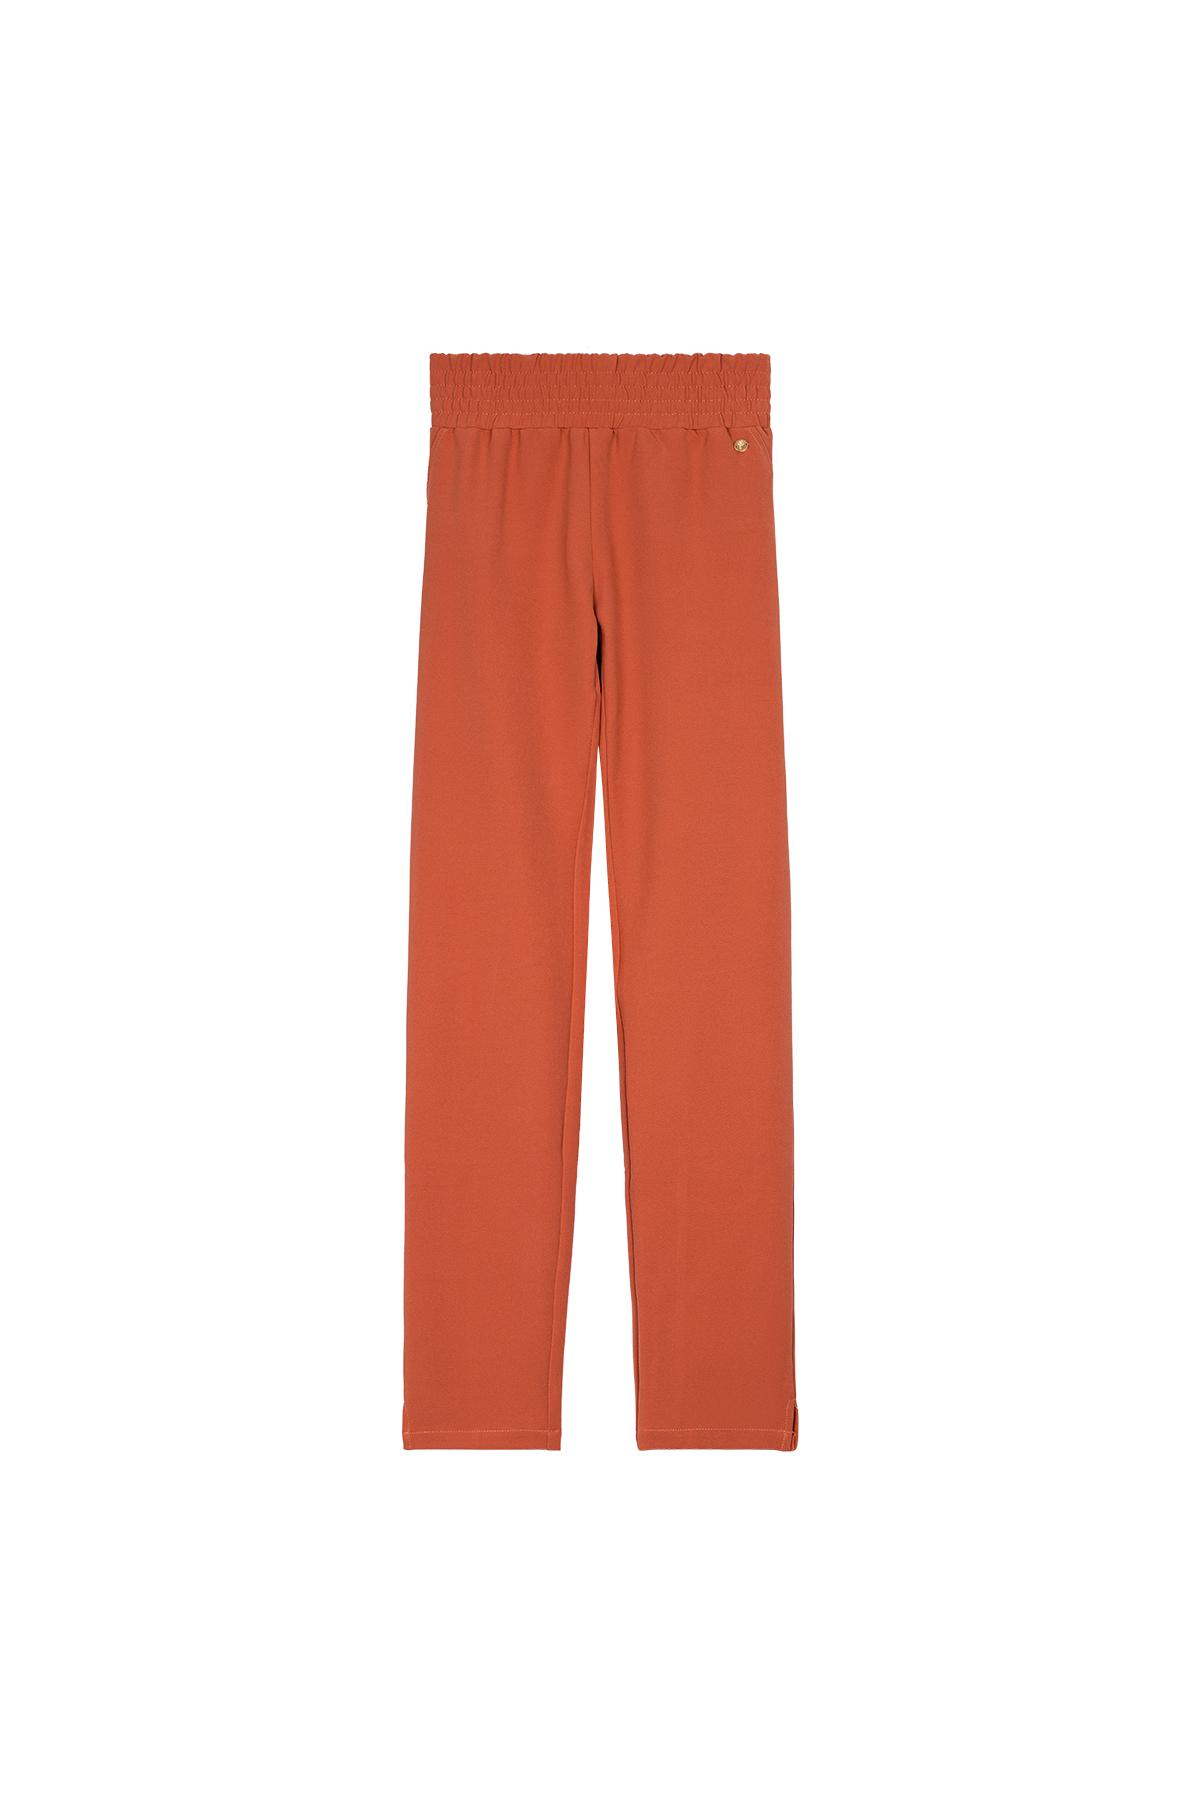 Slim fit pants Orange L h5 